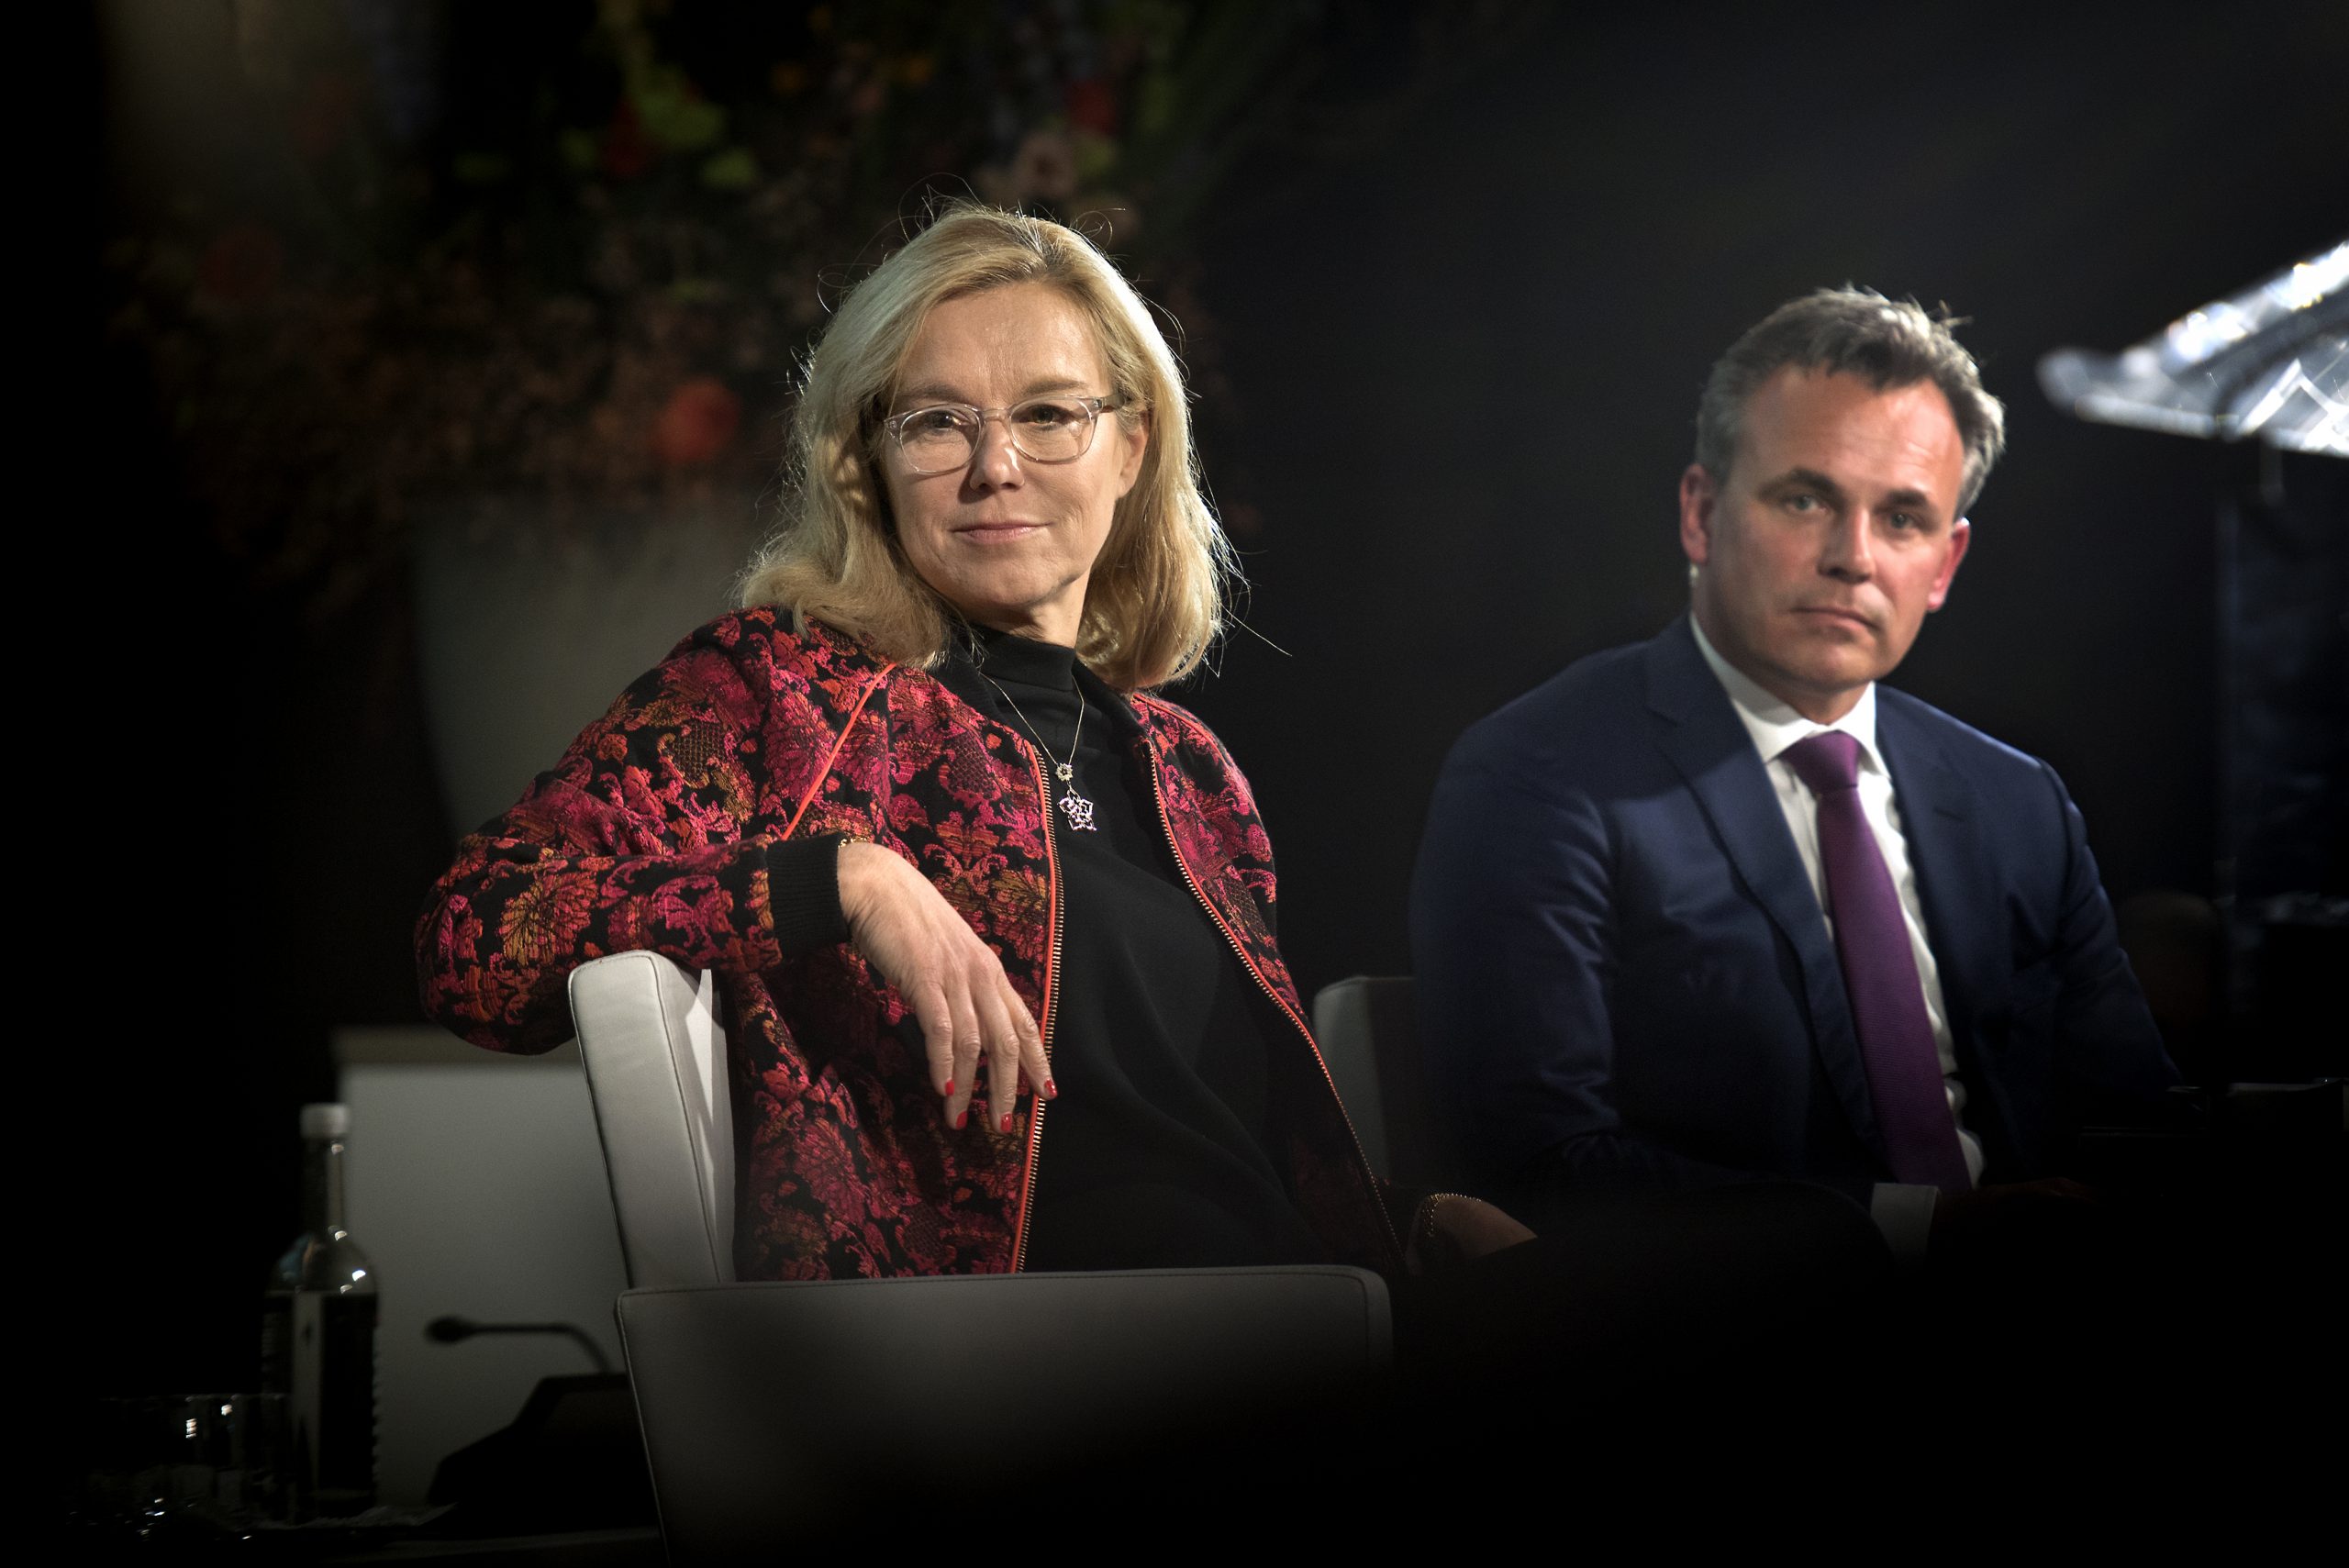 Mark Harbers naast Sigrid Kaag, waarmee hij samen in kabinet Rutte IV zal zitten. (Foto Wikimedia)